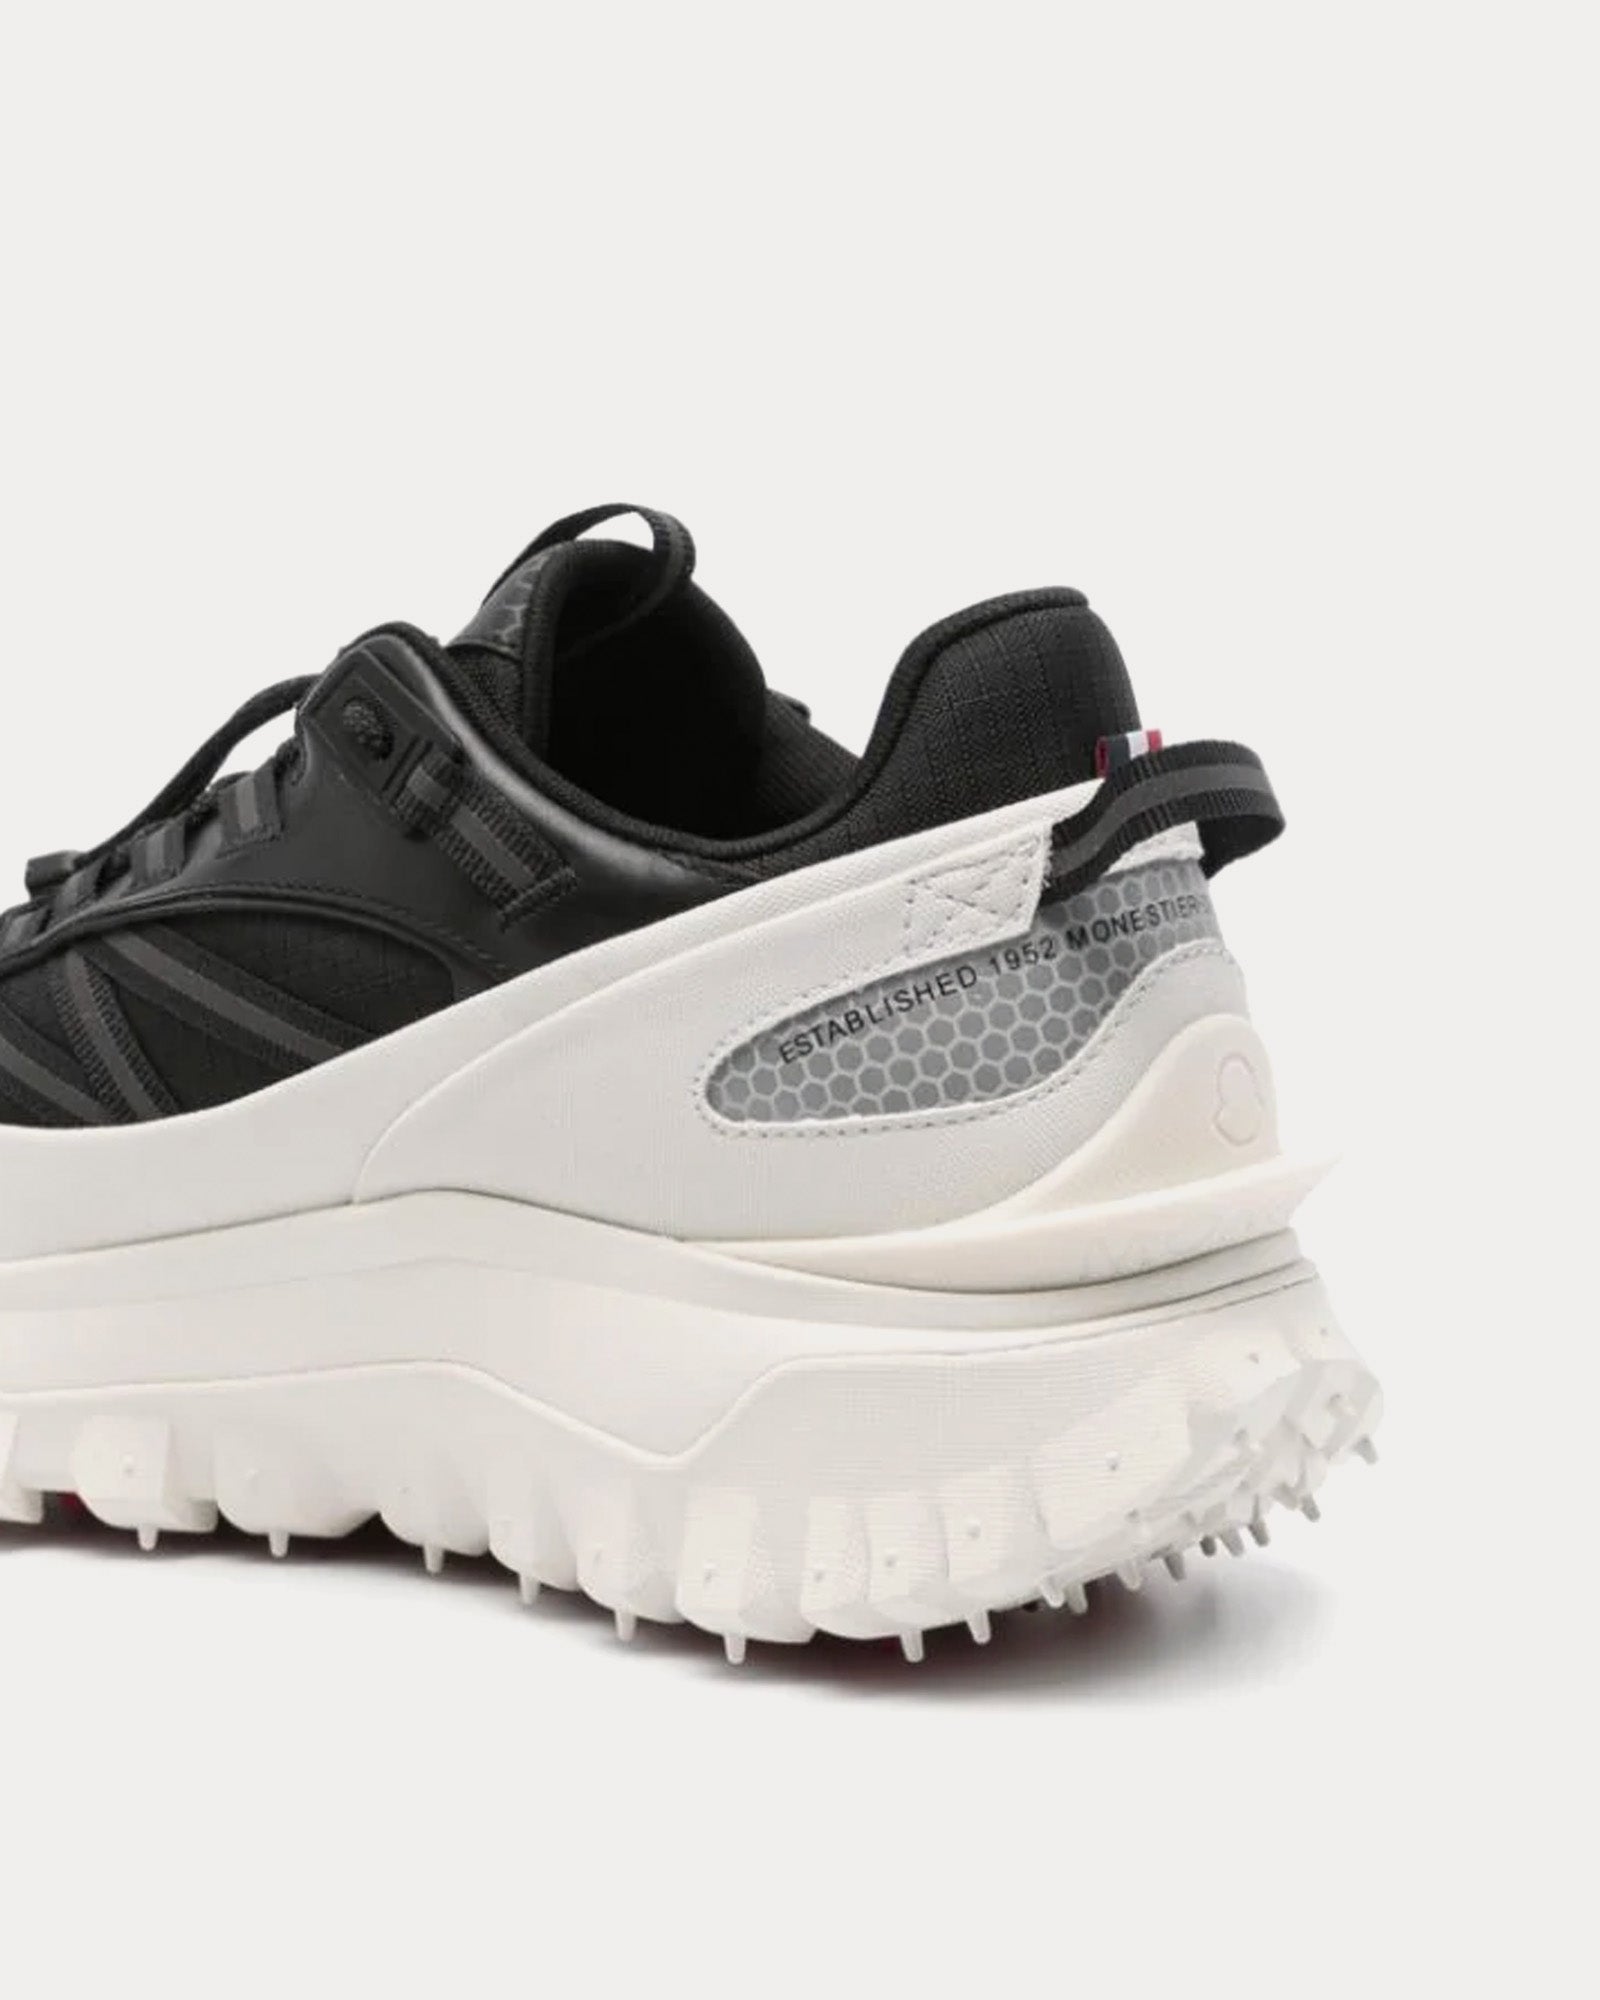 Moncler - Trailgrip GTX Black / Snow White Low Top Sneakers